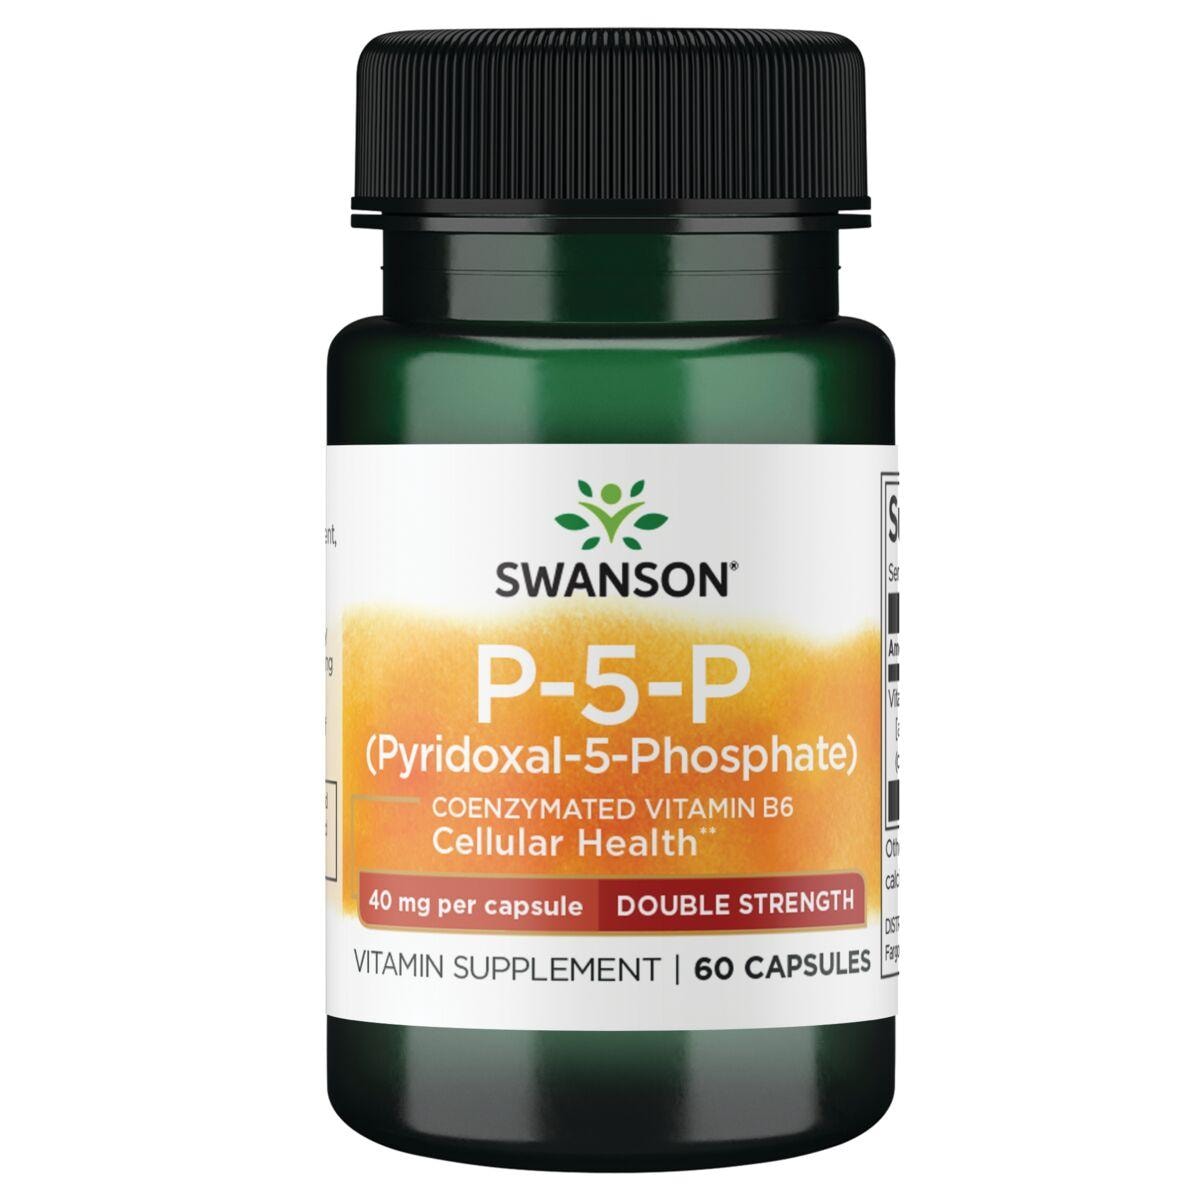 Swanson Ultra P-5-P Pyridoxal-5-Phosphate - Double Strength Vitamin | 40 mg | 60 Caps